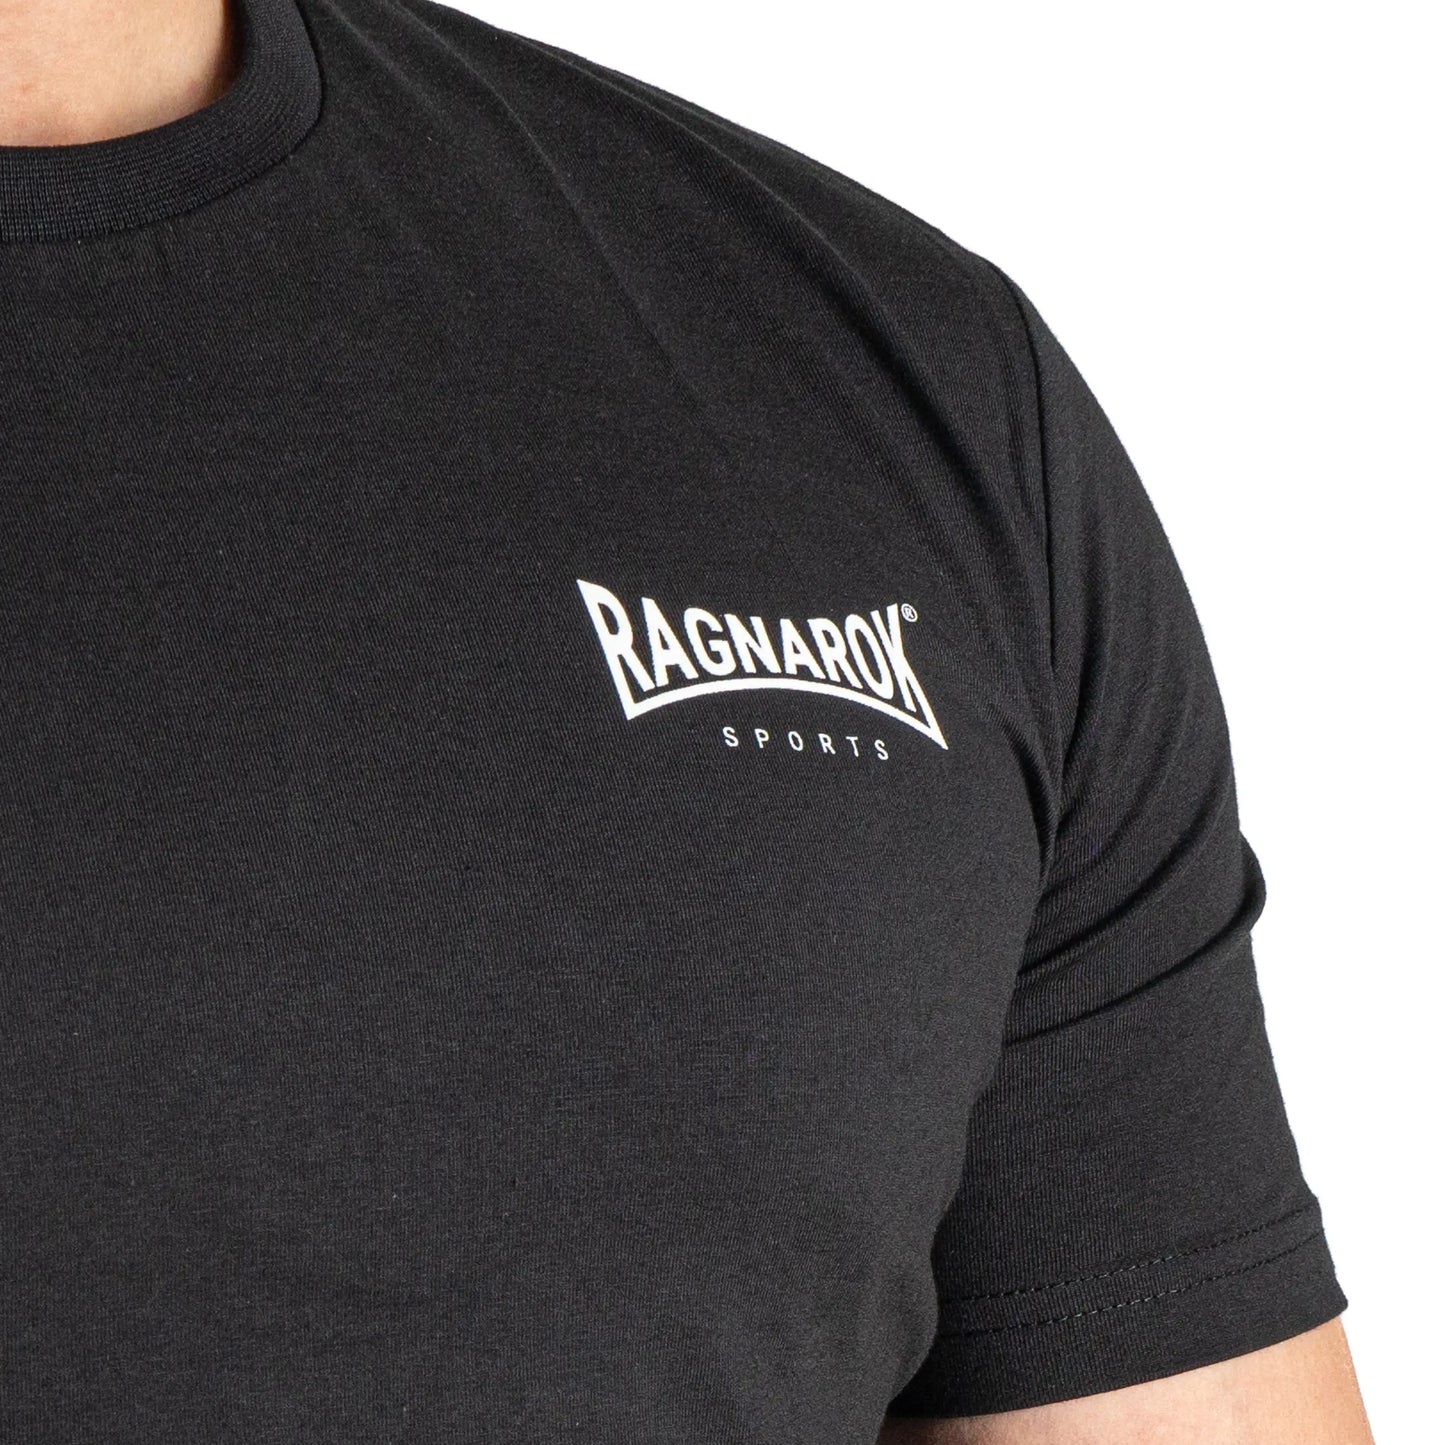 Ragnarok Sports T-Shirt